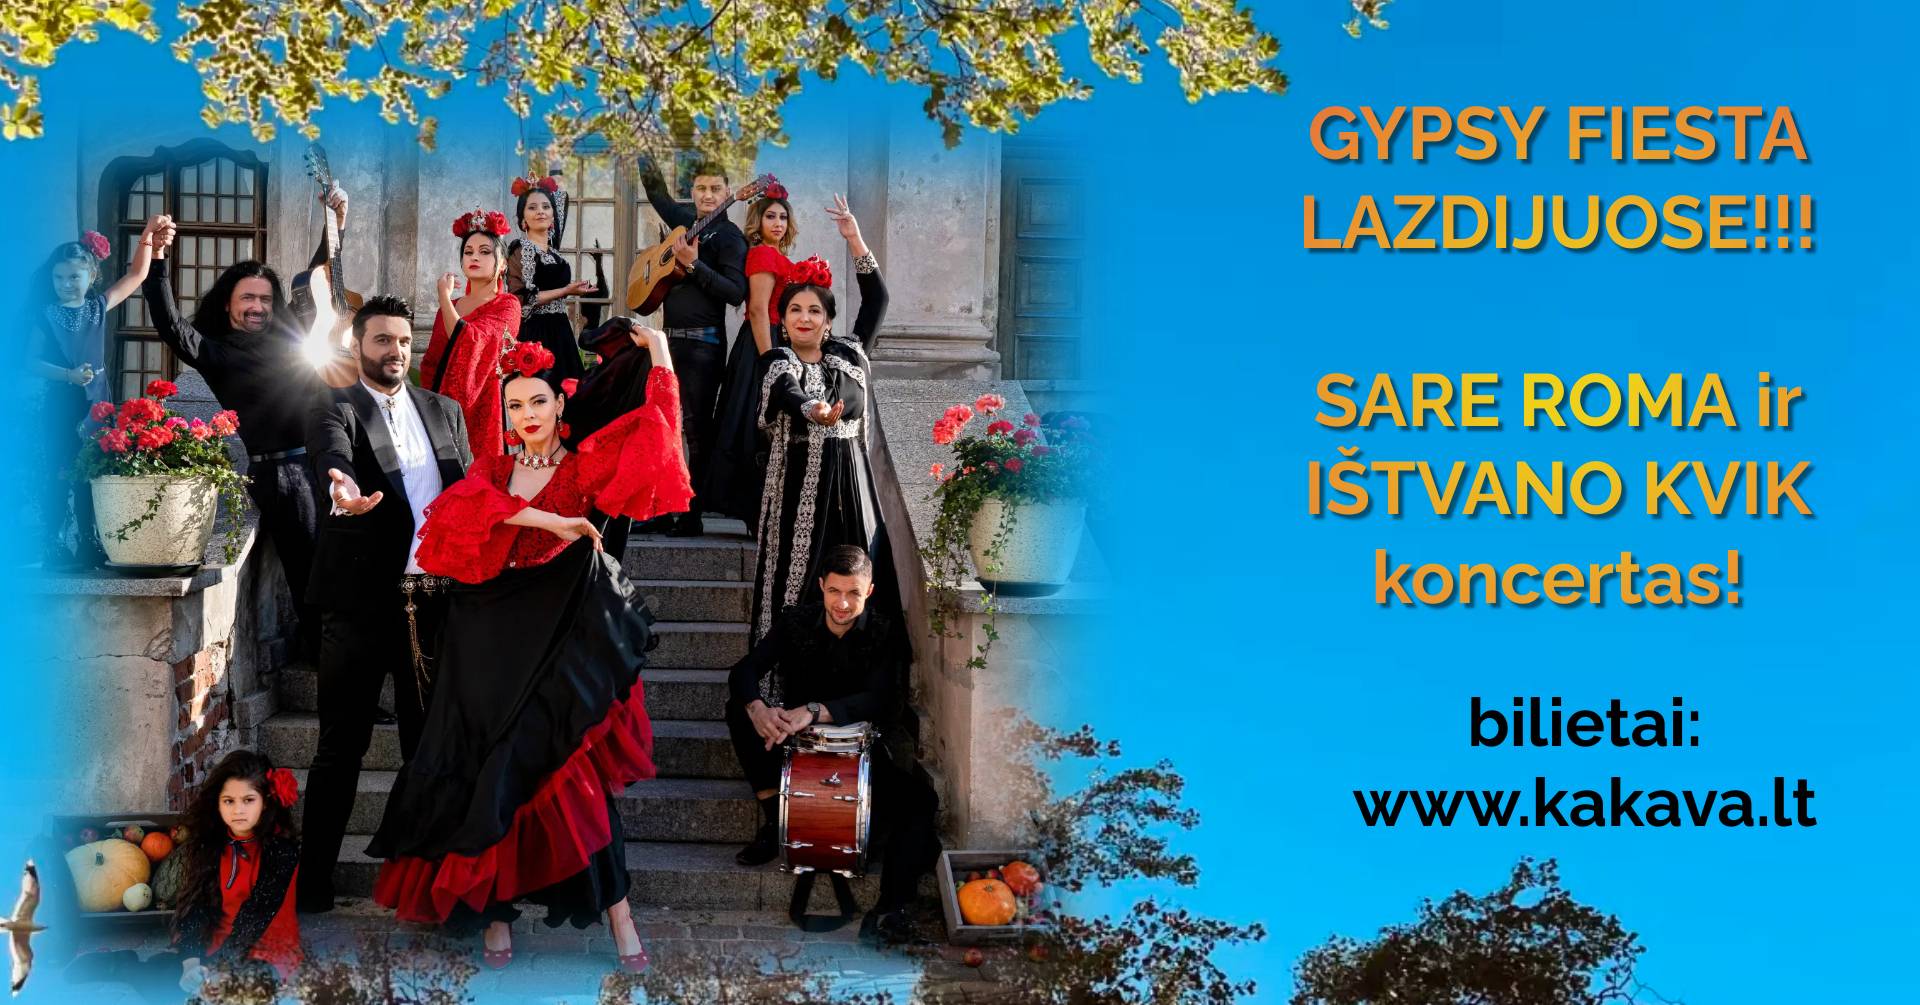 Ištvanos Kvik and SARE ROMA will hold an impressive show in Lazdiyi